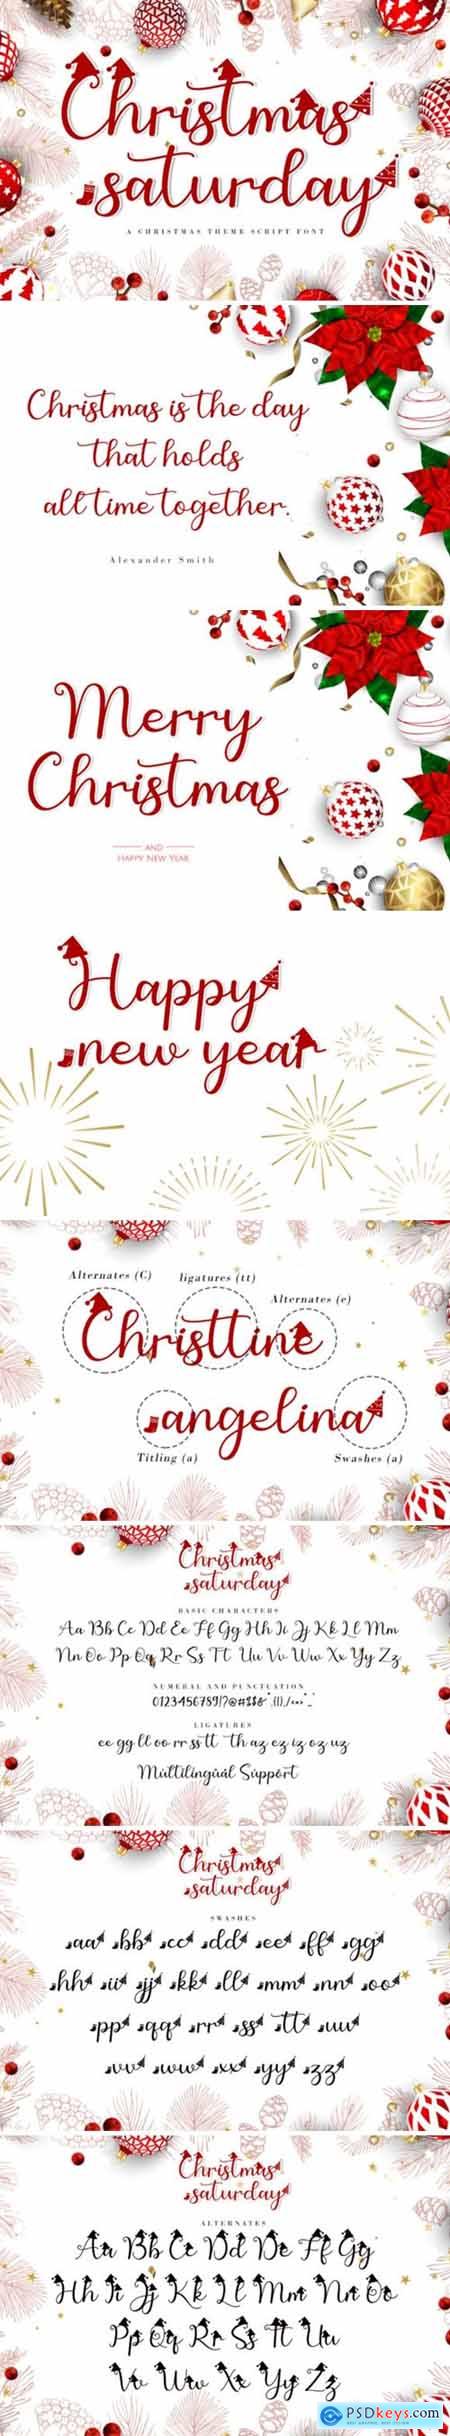 Christmas Saturday Font